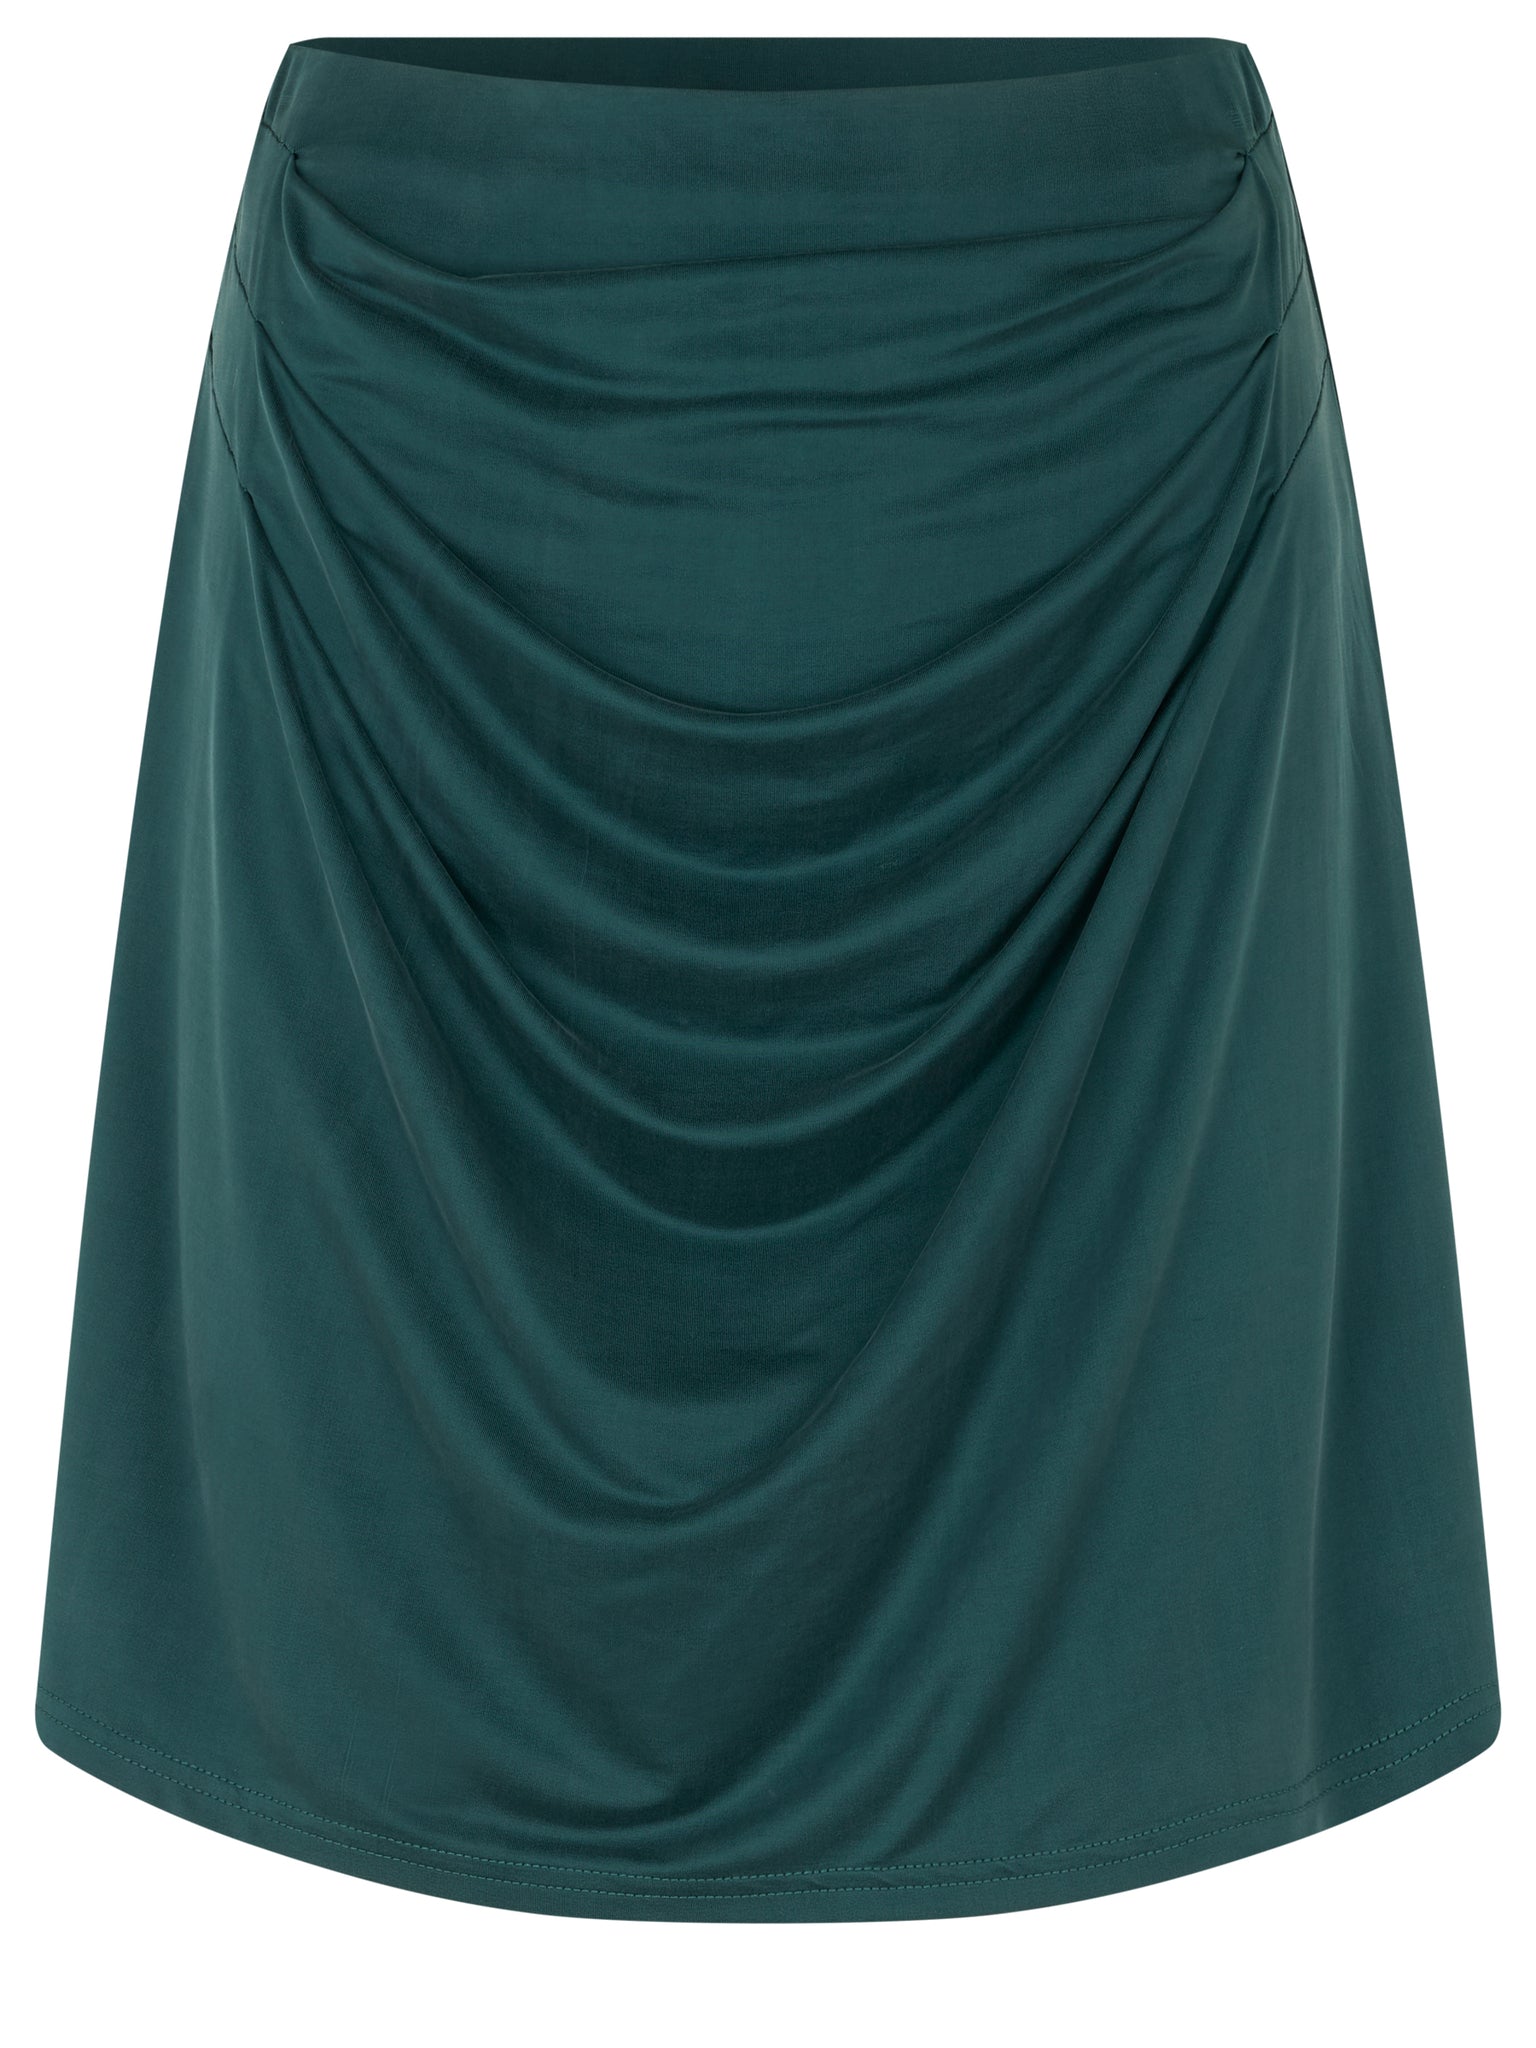 Cupro skirt